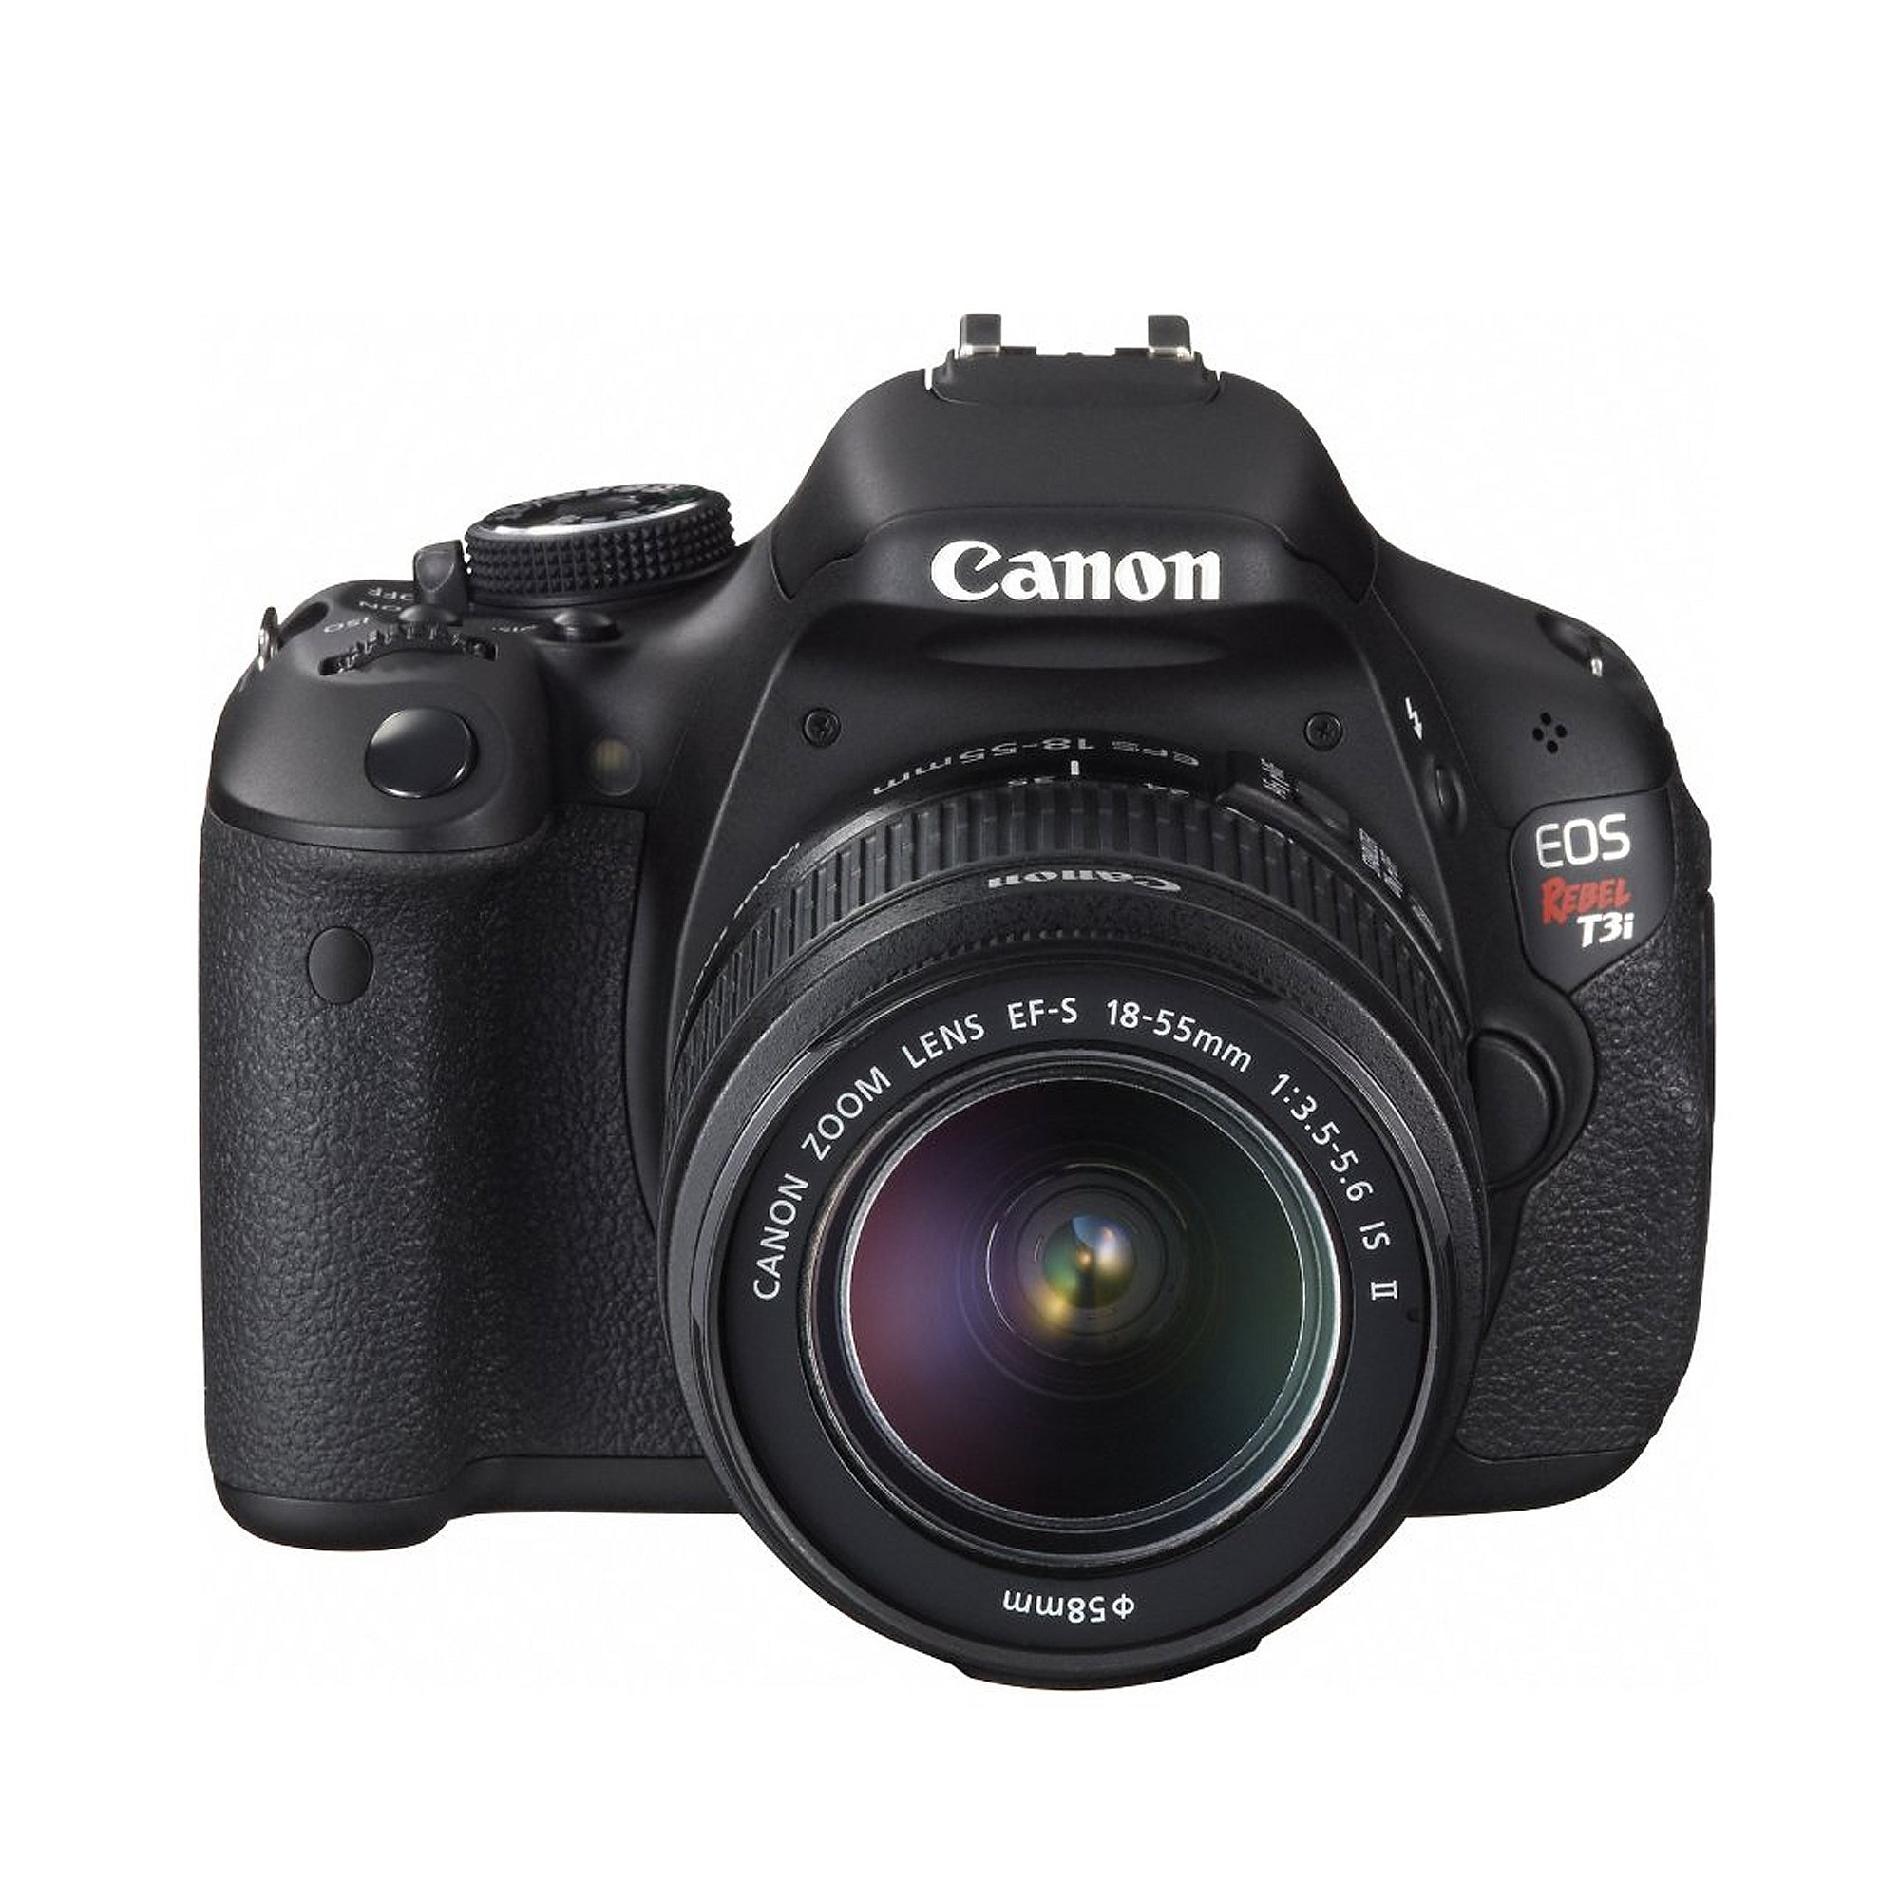 Canon EOS Rebel T3i 18-55mm IS II Digital SLR Camera Kit Black 3 in. or more